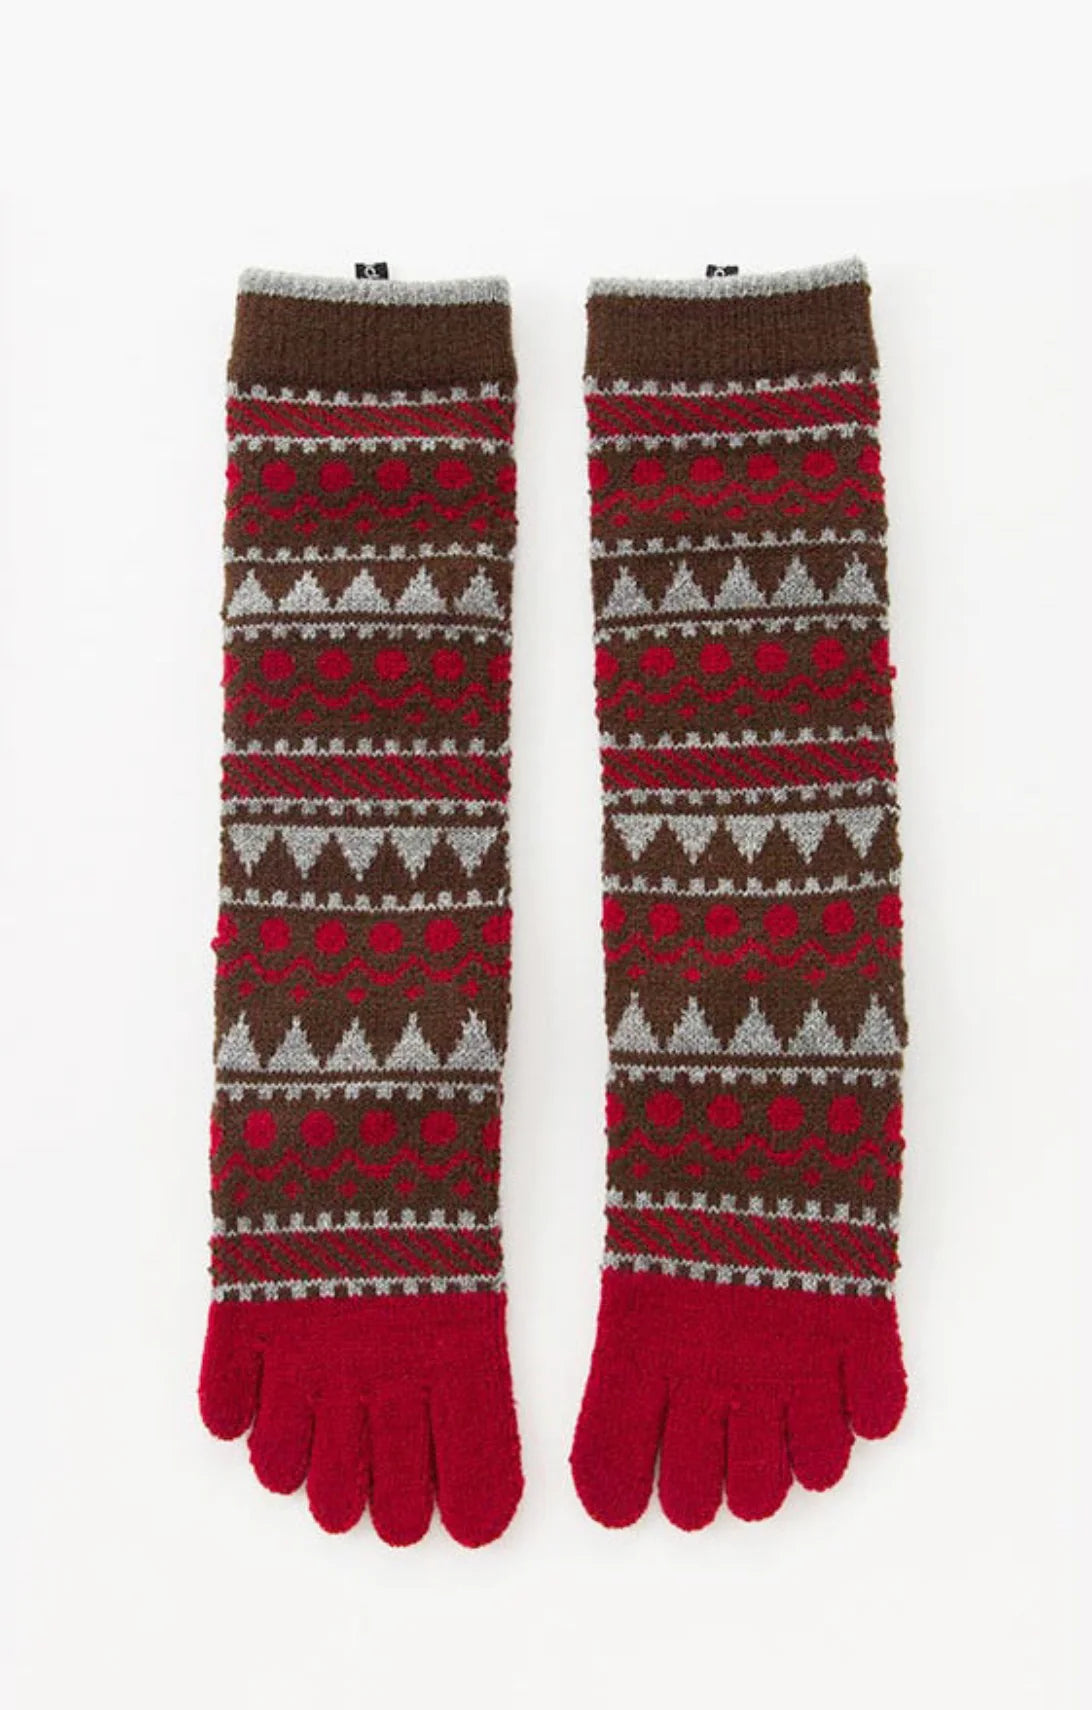 Wool Blend Socks, Forest Textile